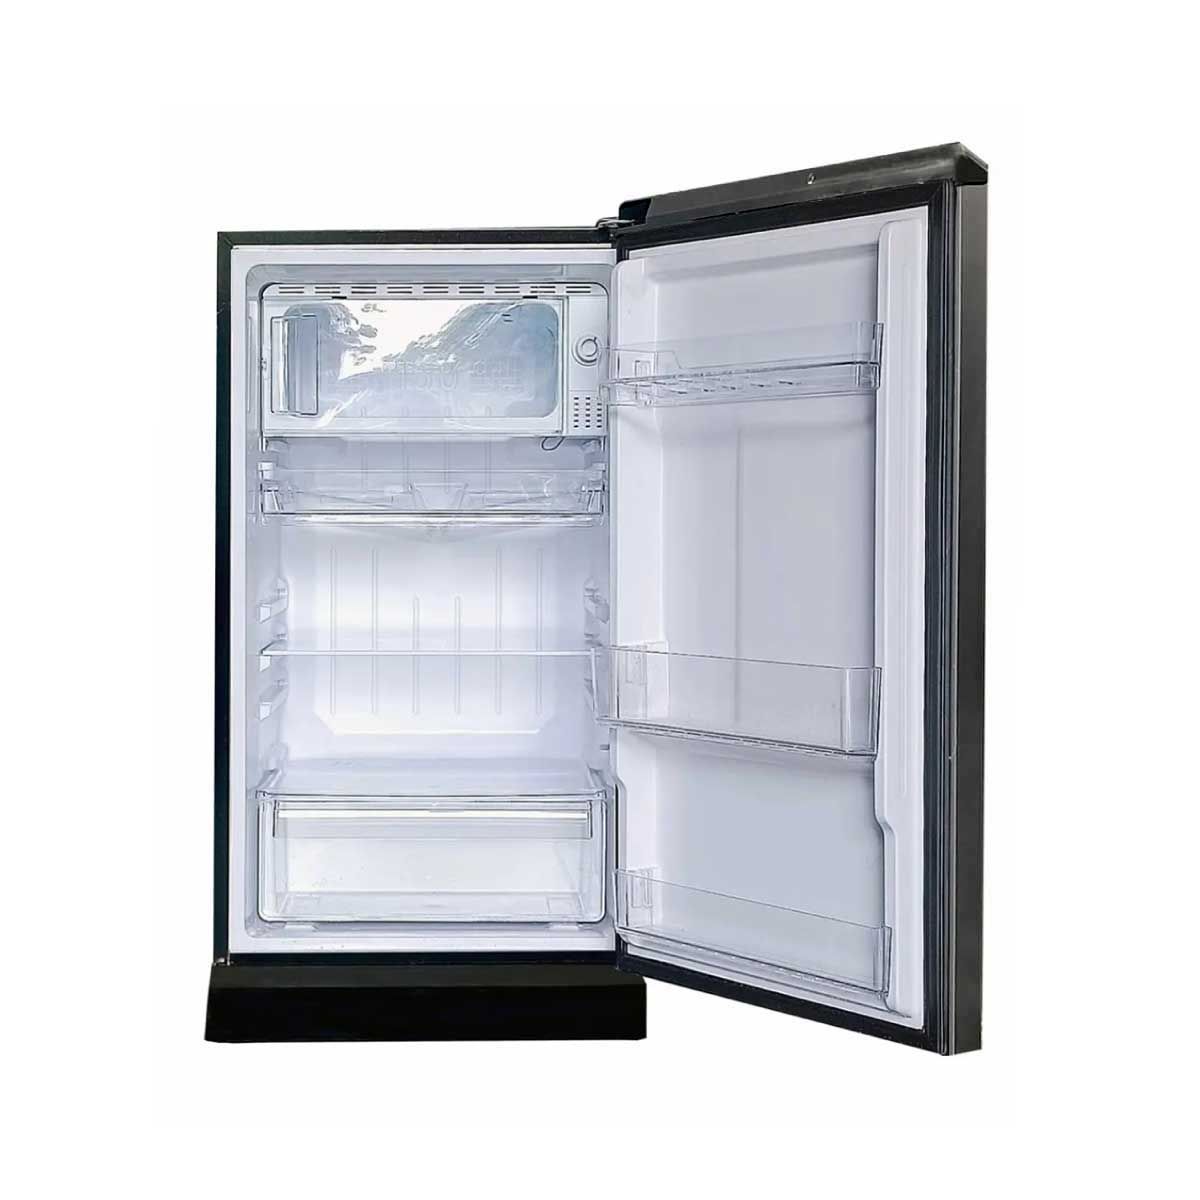 HAIER ตู้เย็น 1 ประตู 5.3 คิว สีดำ รุ่น HR-SD159FBE